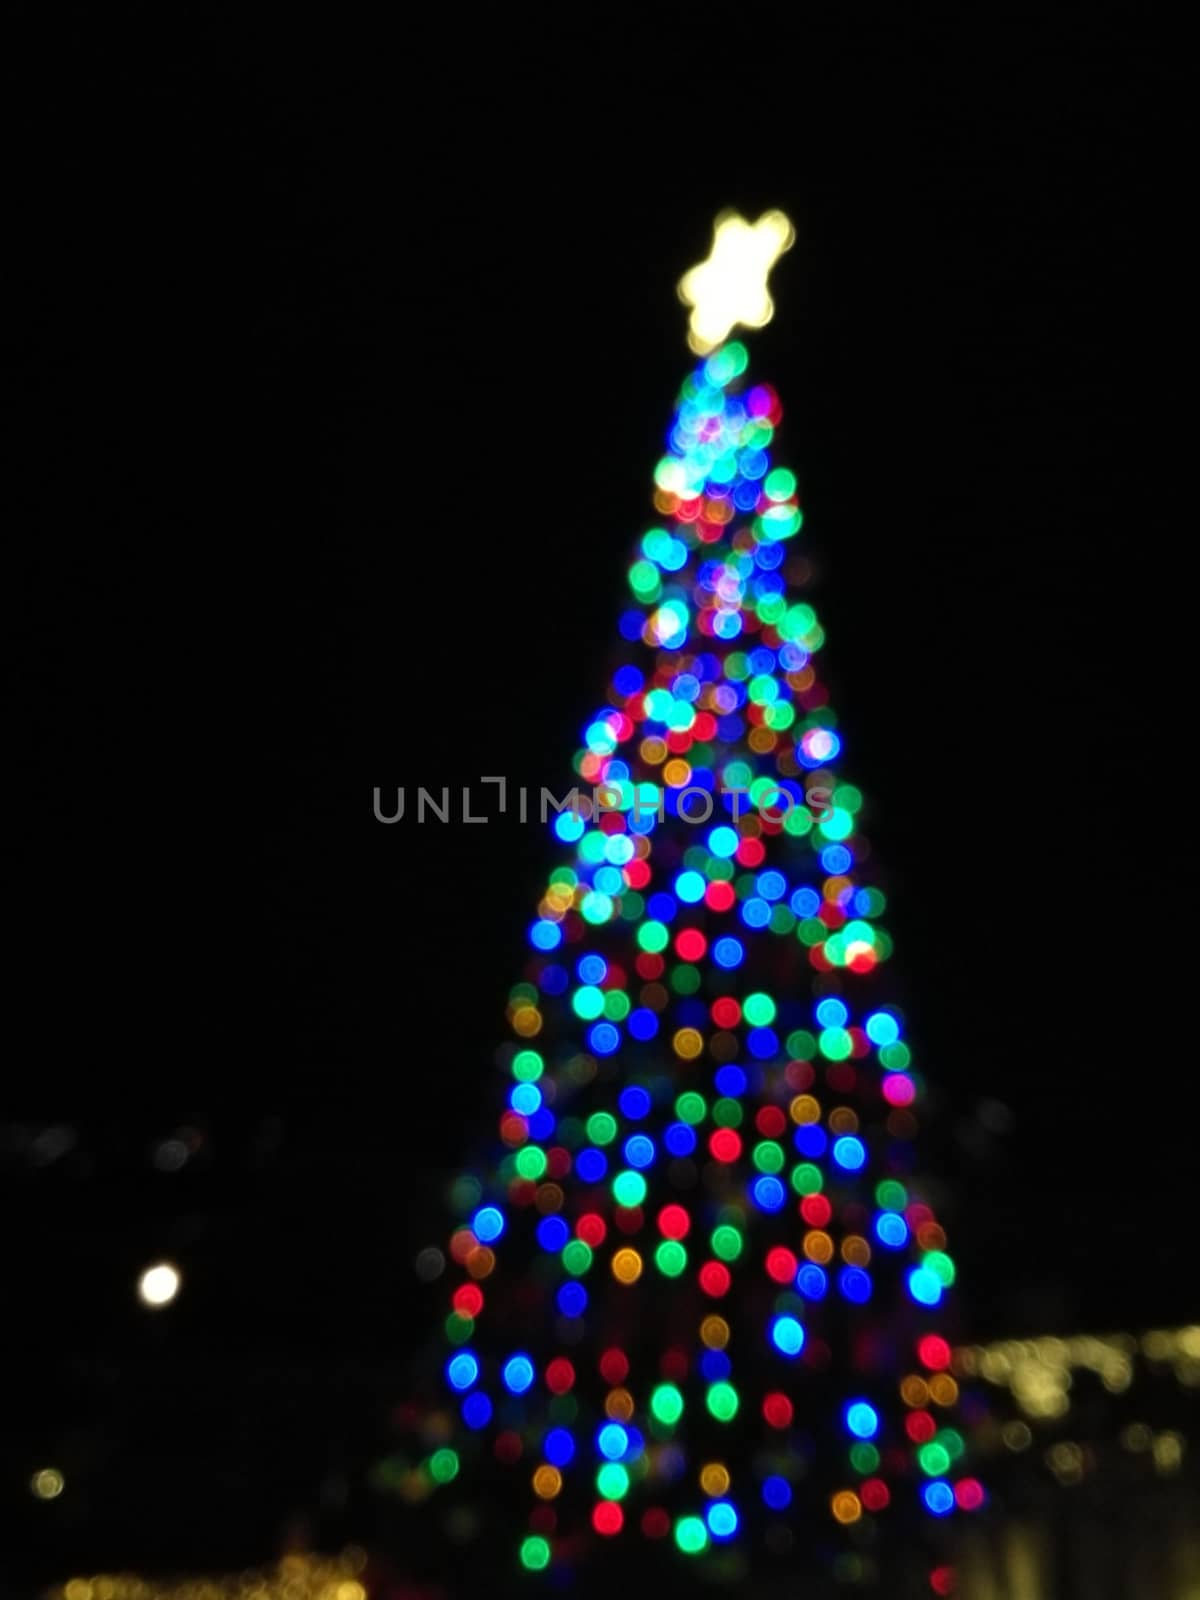 Defocused abstract light Christmas tree shape to celebrate Xmas  by eyeofpaul